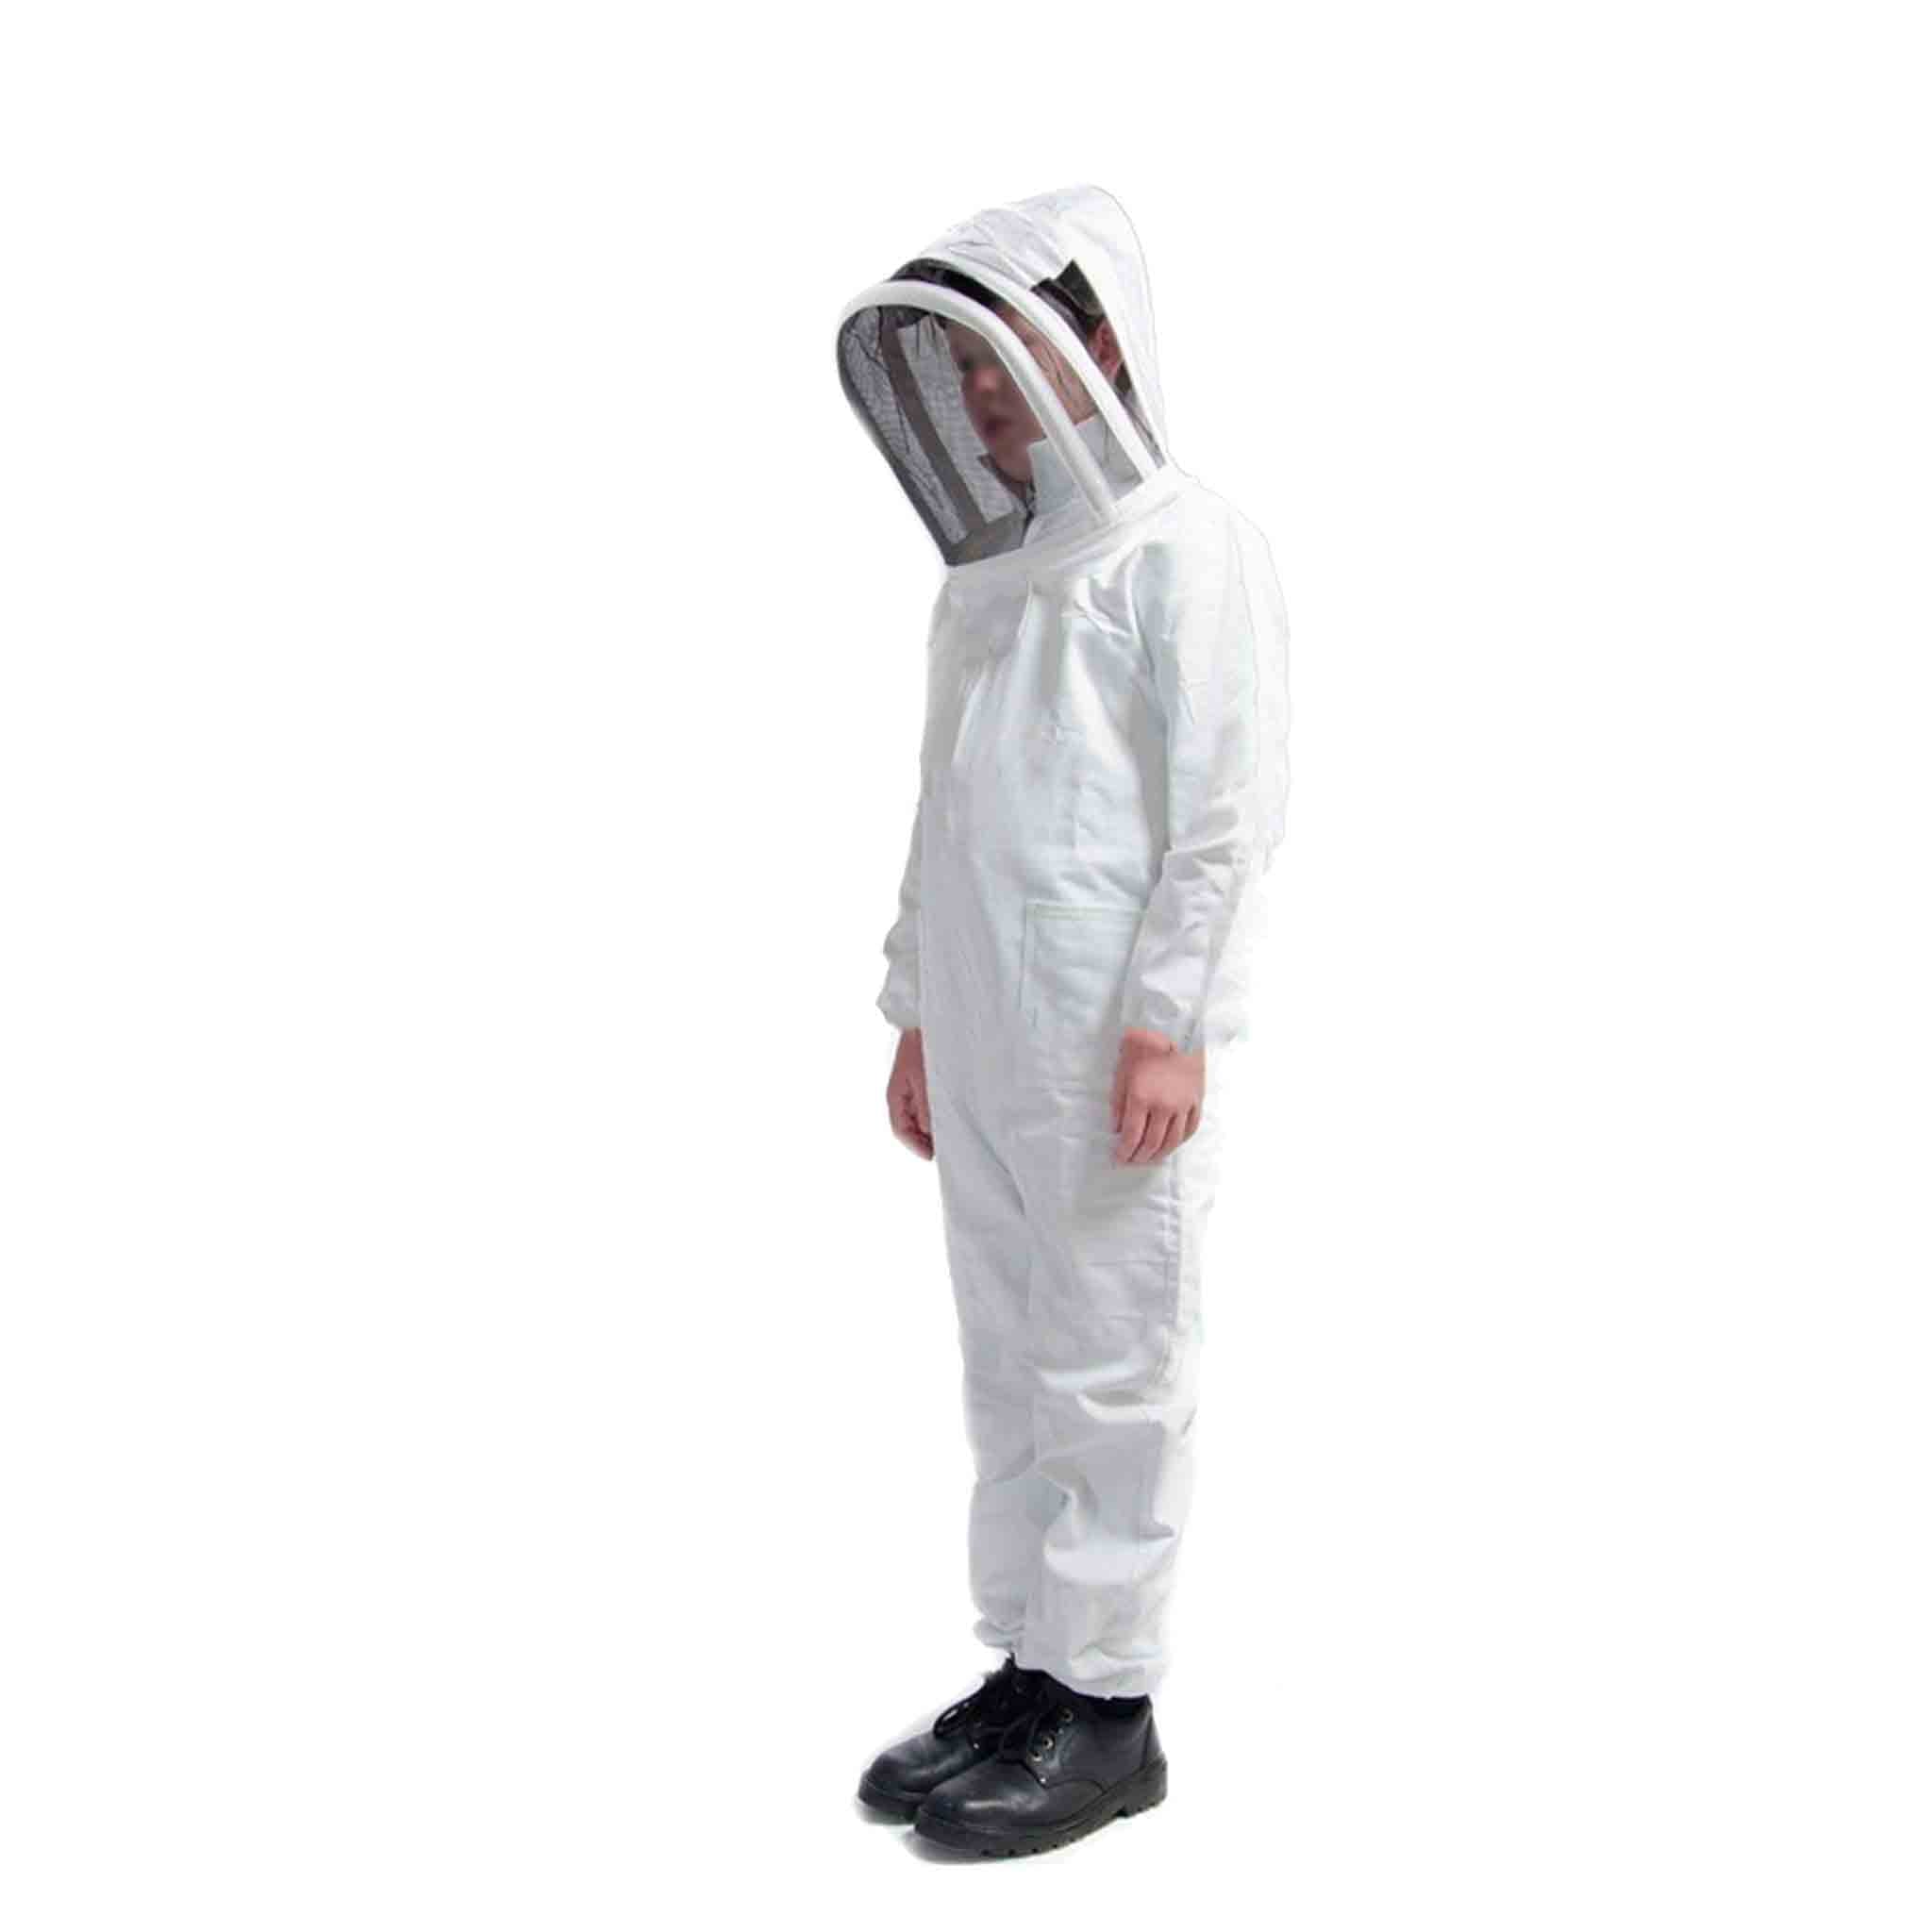 Children/Kids Beekeeping Bee Suit - Clothing collection by Buzzbee Beekeeping Supplies